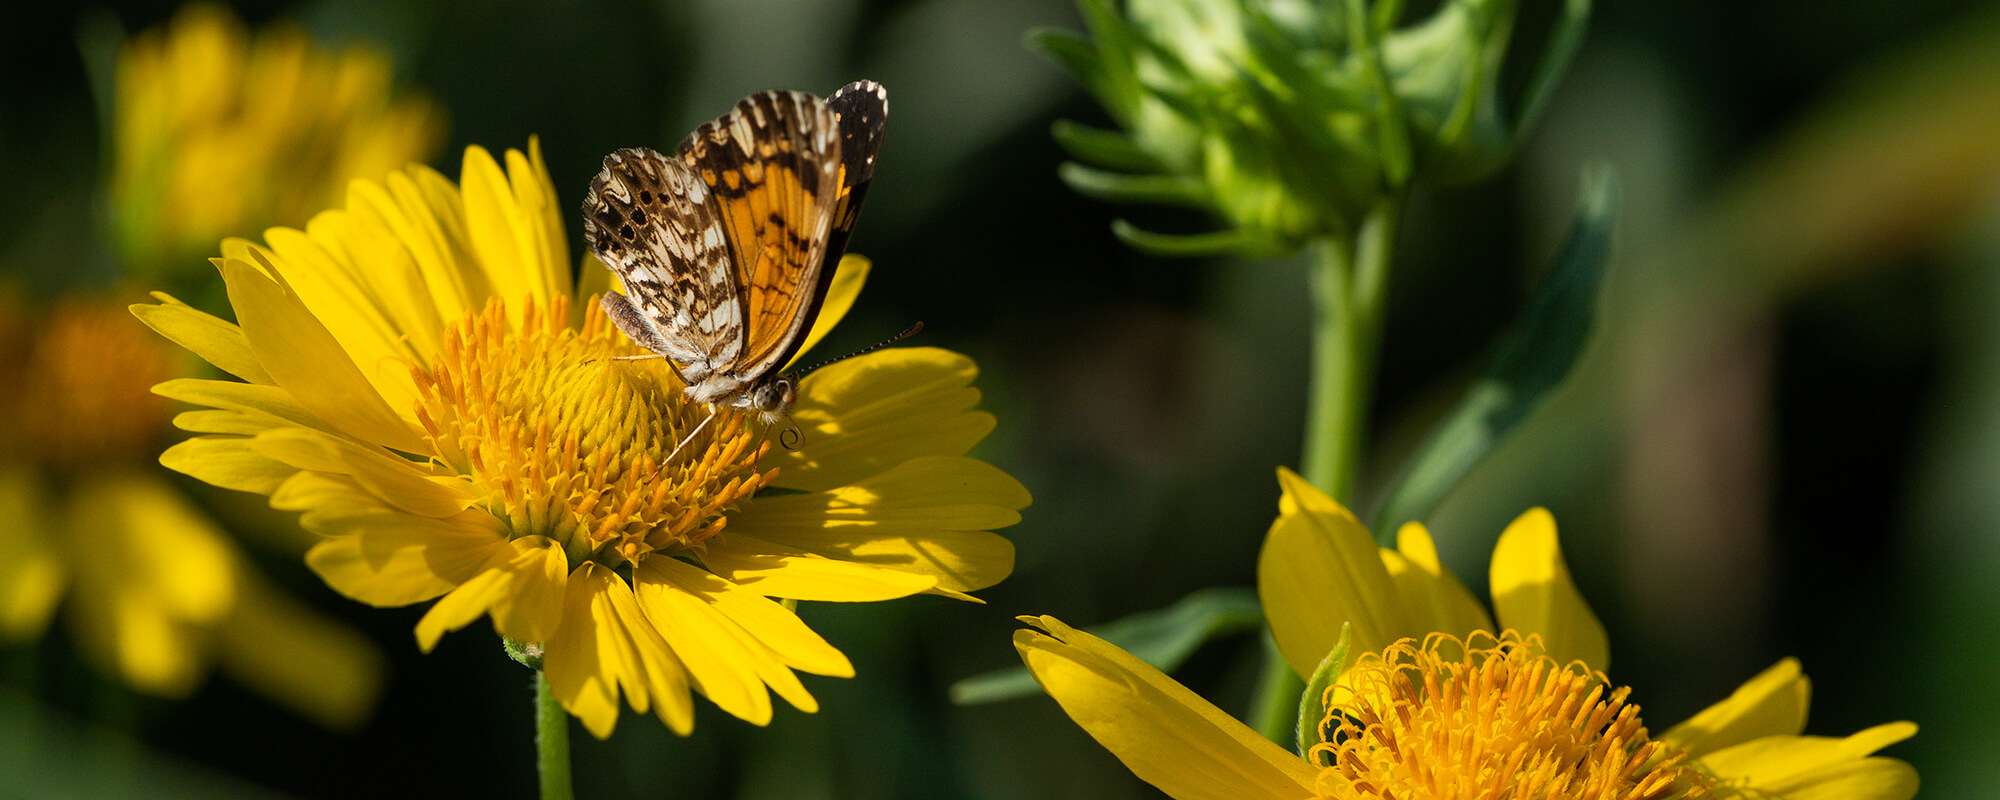 Butterfly resting on flower